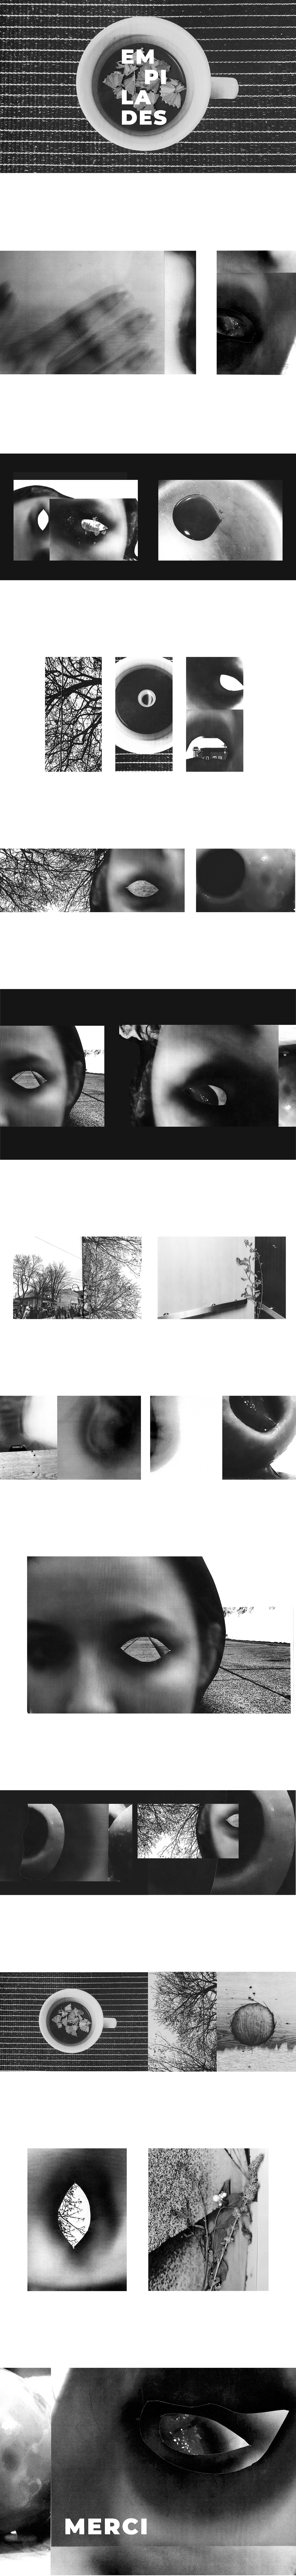 #collage #grunge #lowtech #scan #scanner